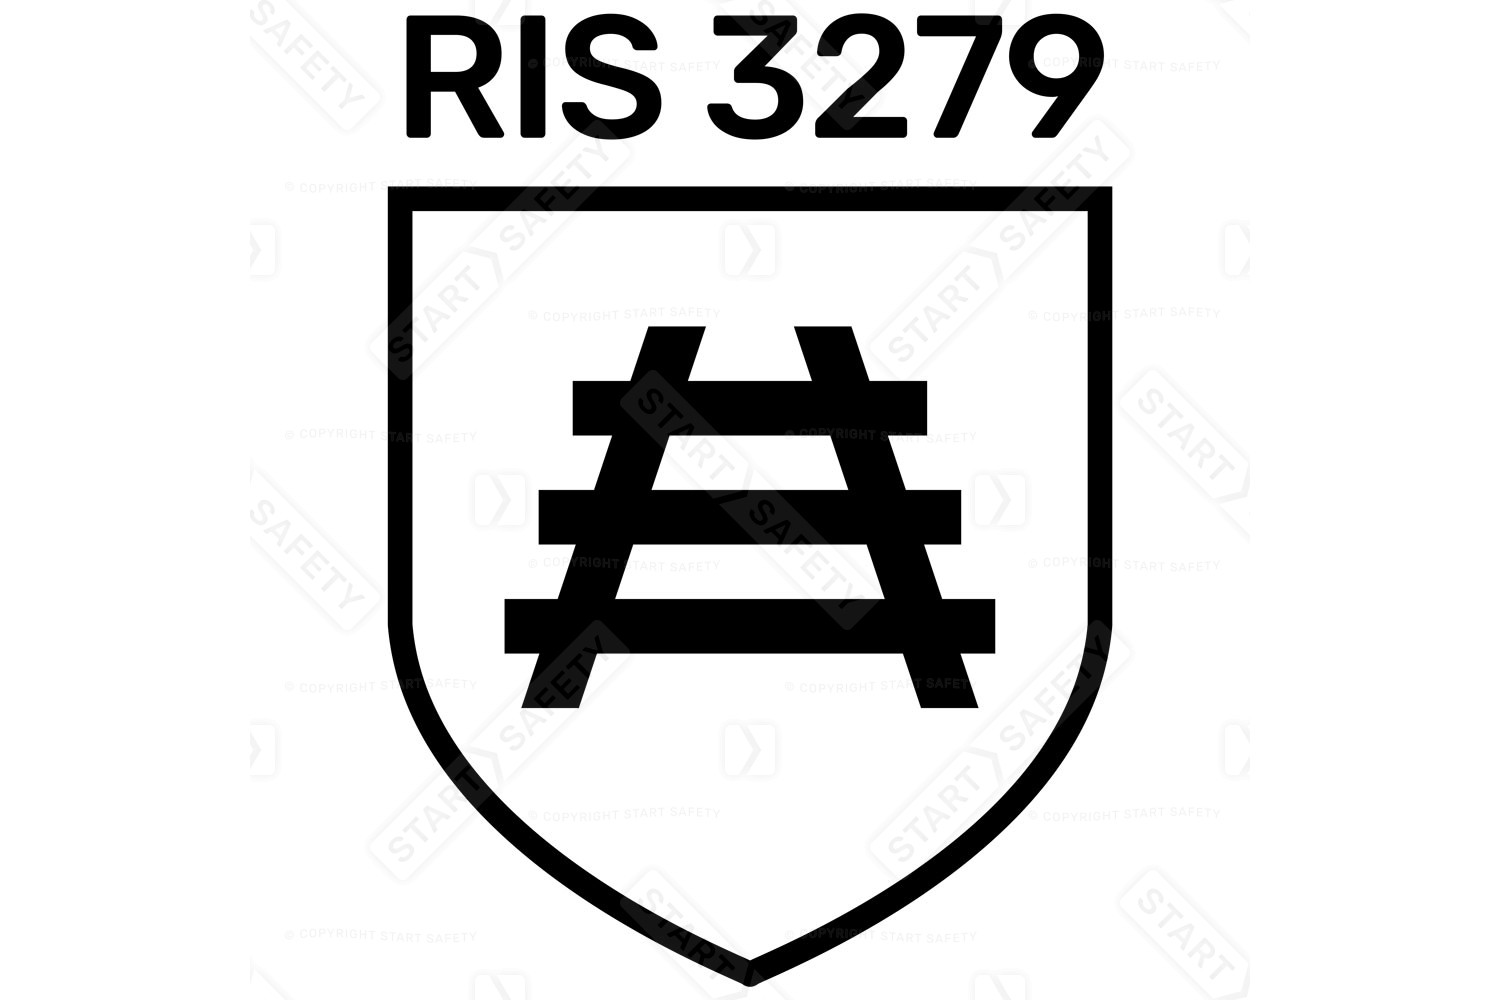 RIS 3279 Rail Industry Workwear Safety Standard